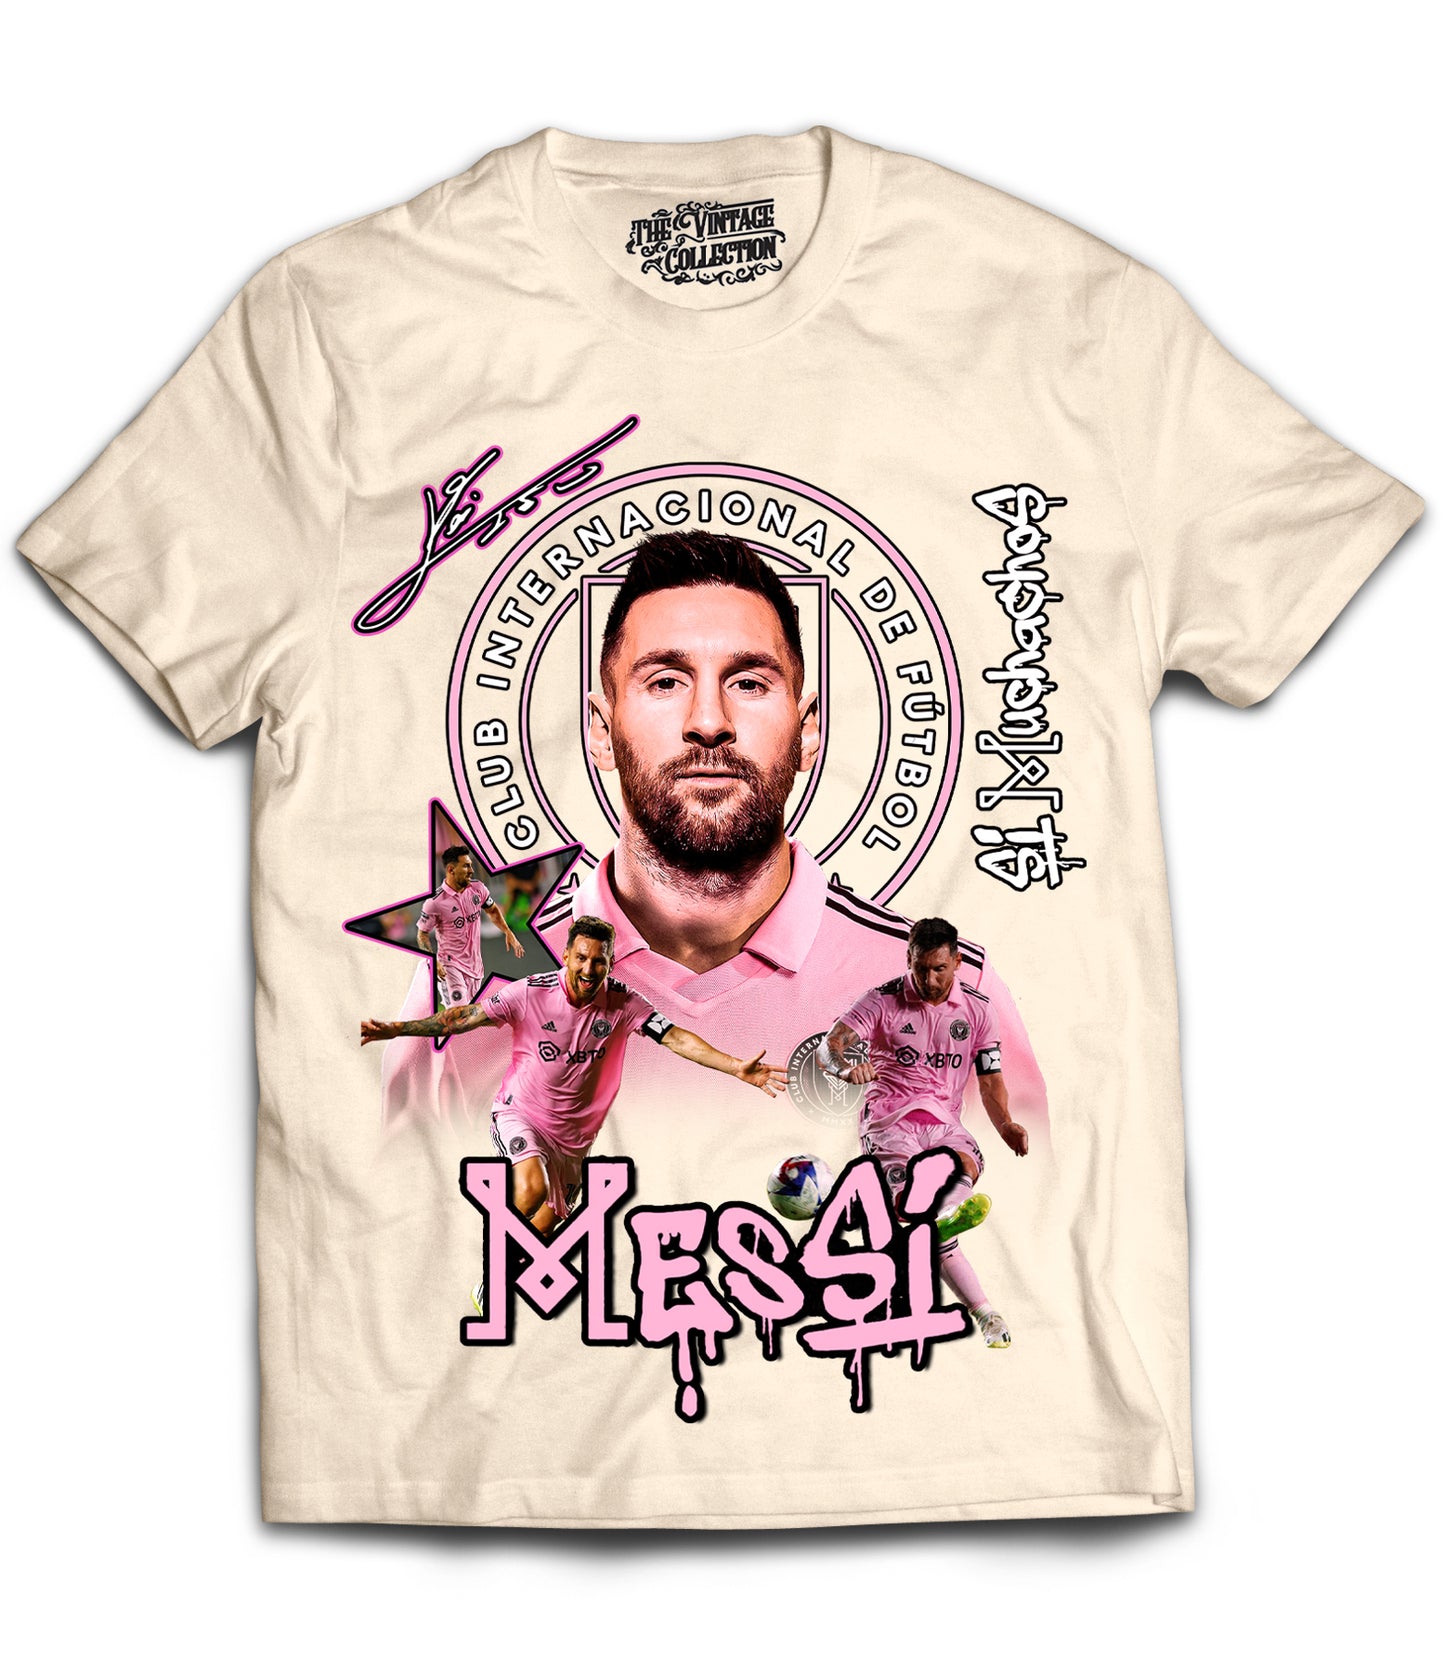 Messi Vintage "Miami" Shirt (Cream)